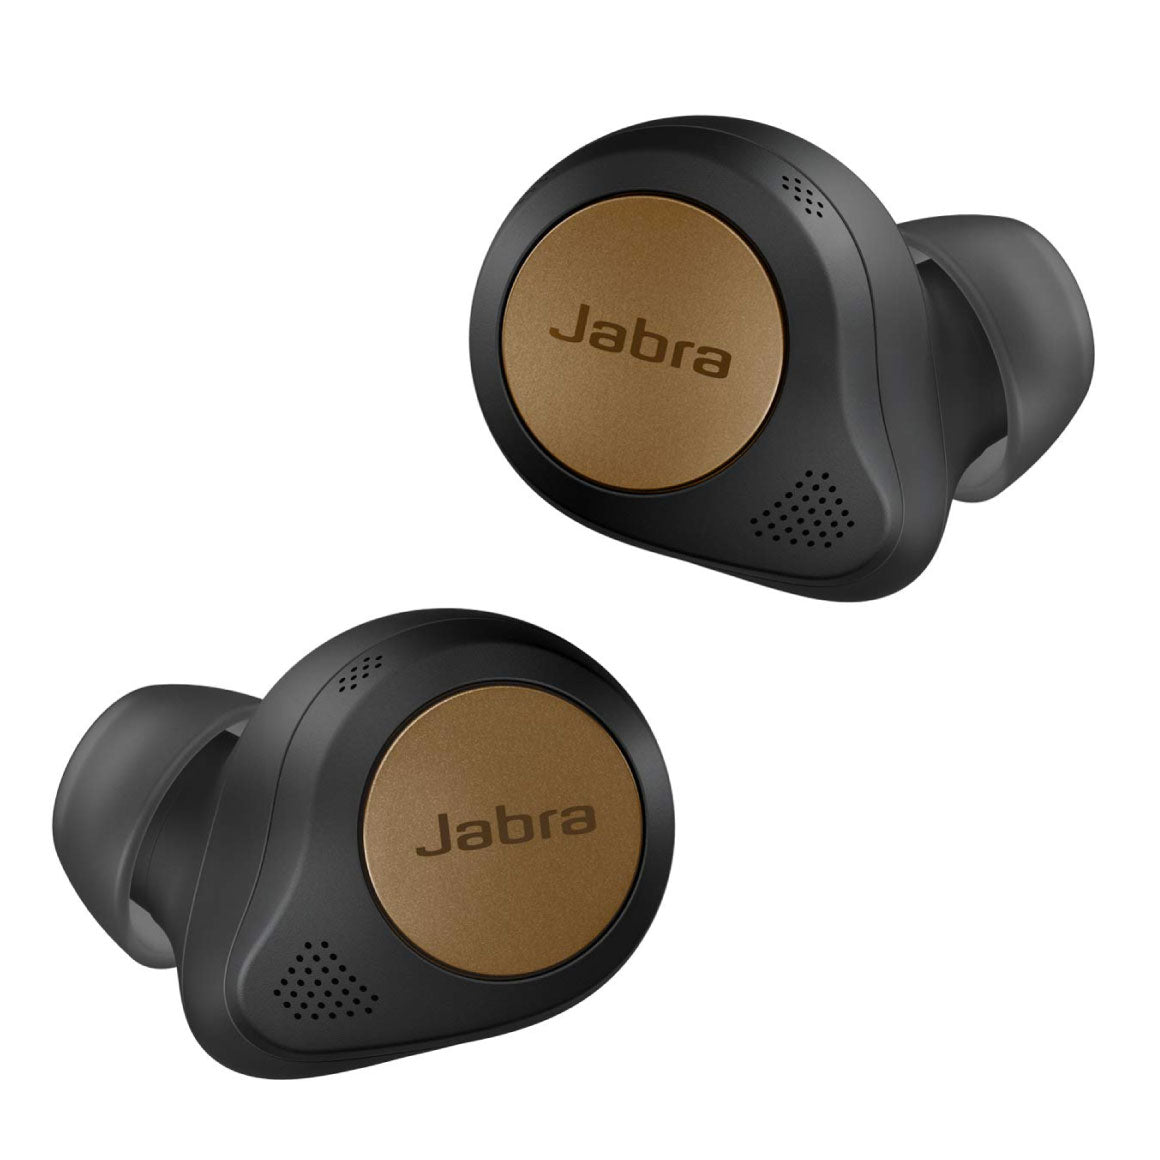 Headphone-Zone-Jabra-85t-Copper Black